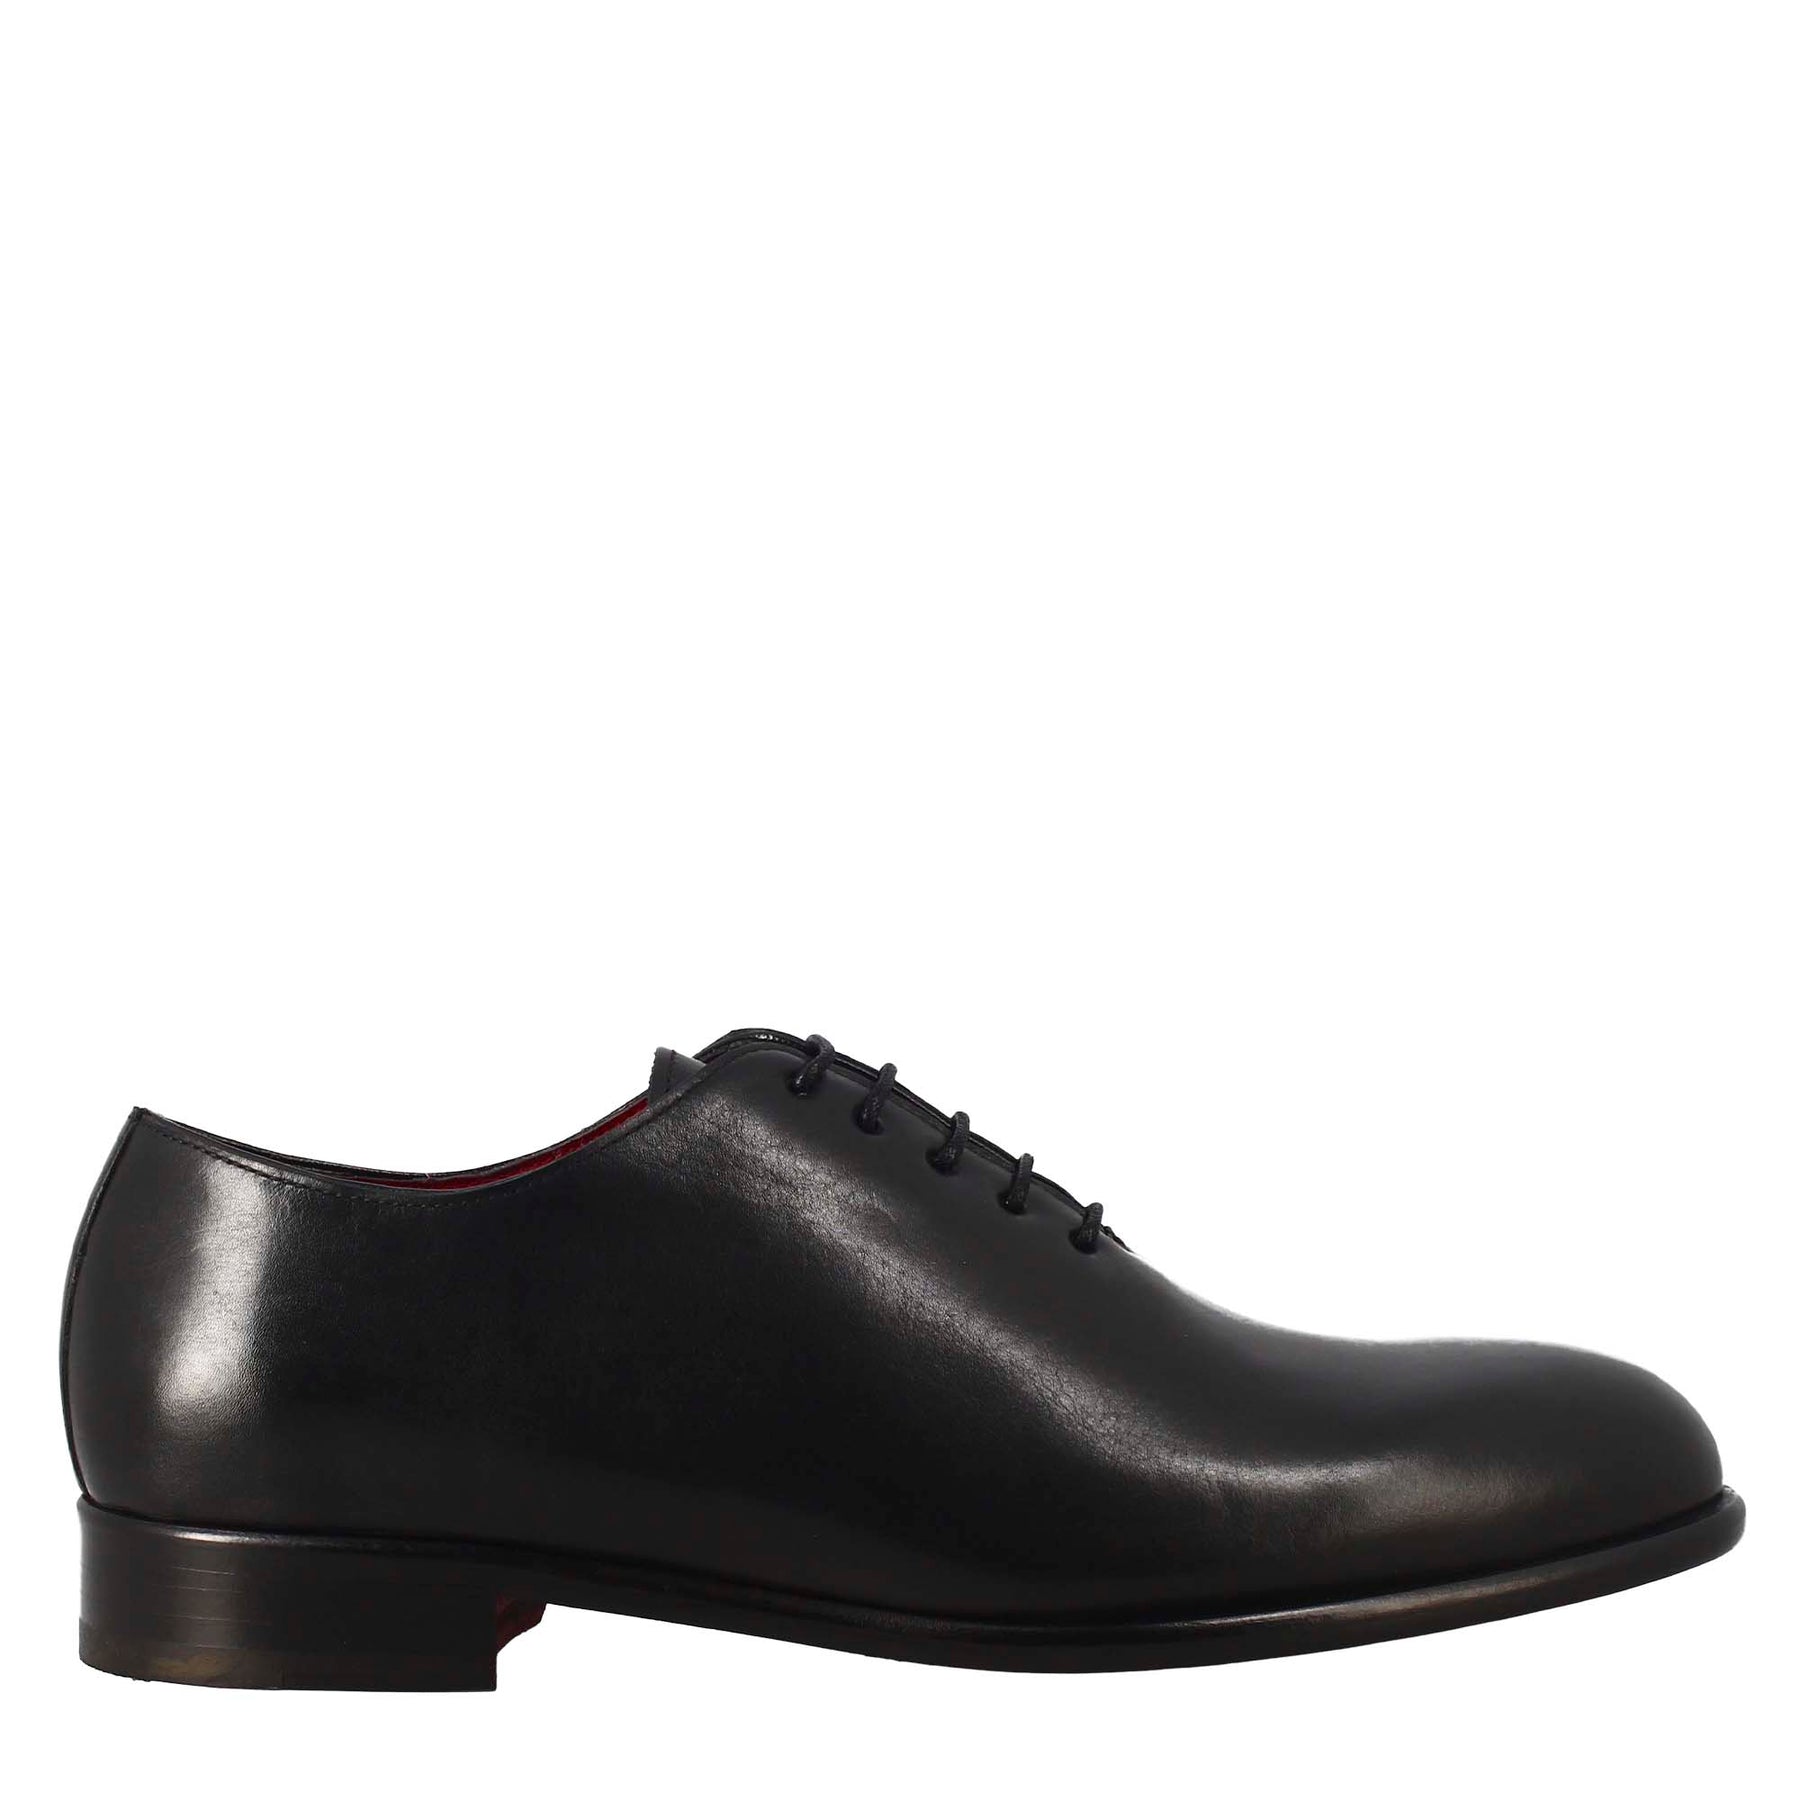 Men's elegant black wholecut leather oxford